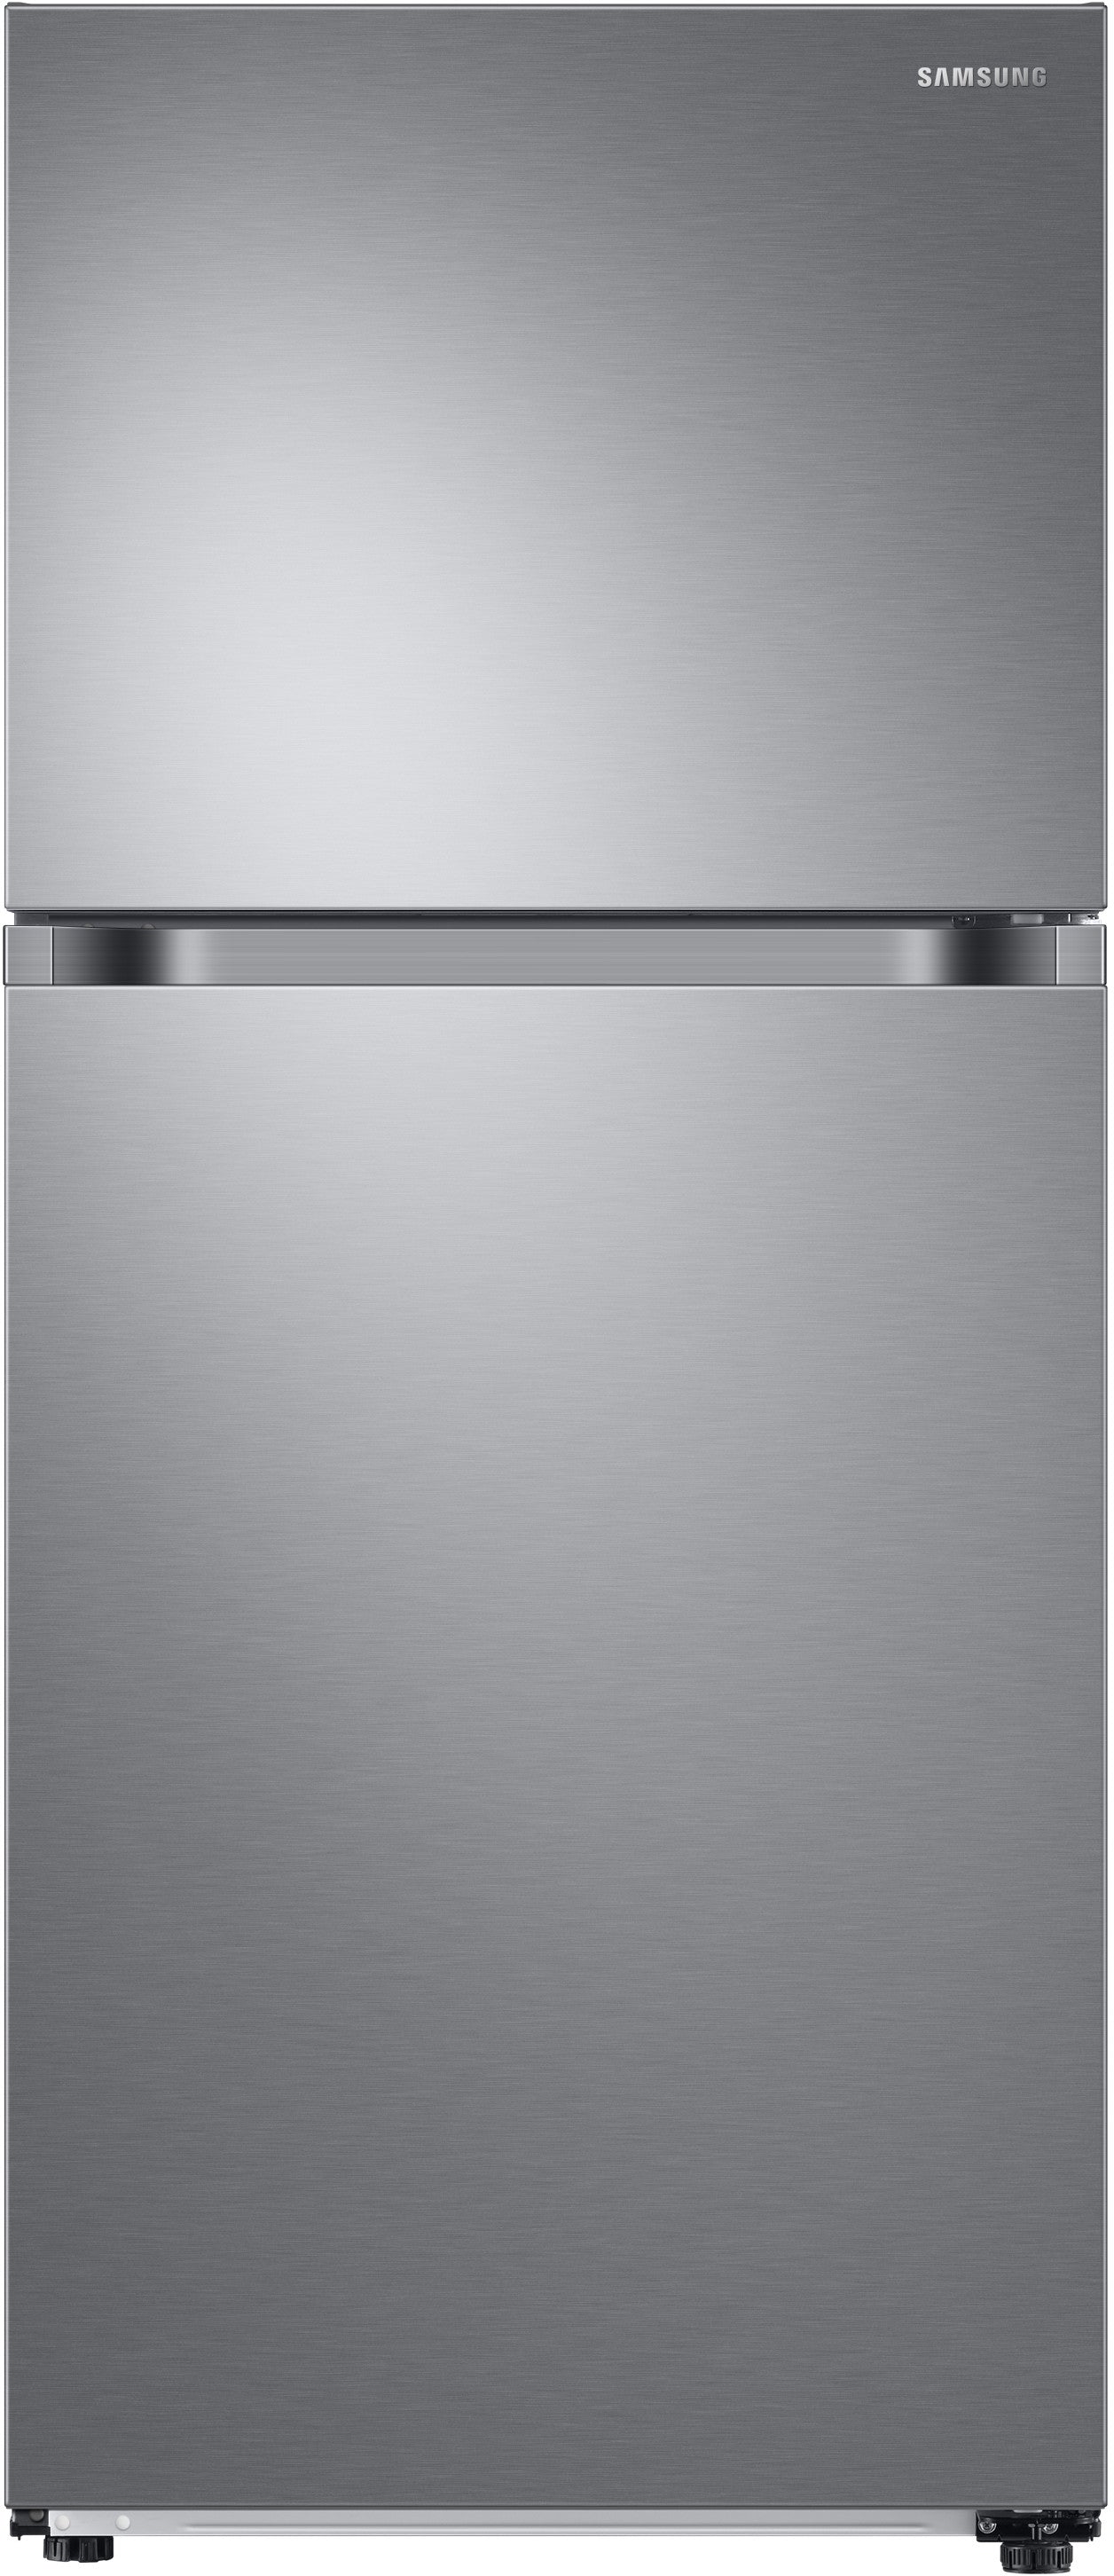 Samsung RT18M6215SR/AA 18 Cu. Ft. Capacity Top Freezer Refrigerator With Flex zone